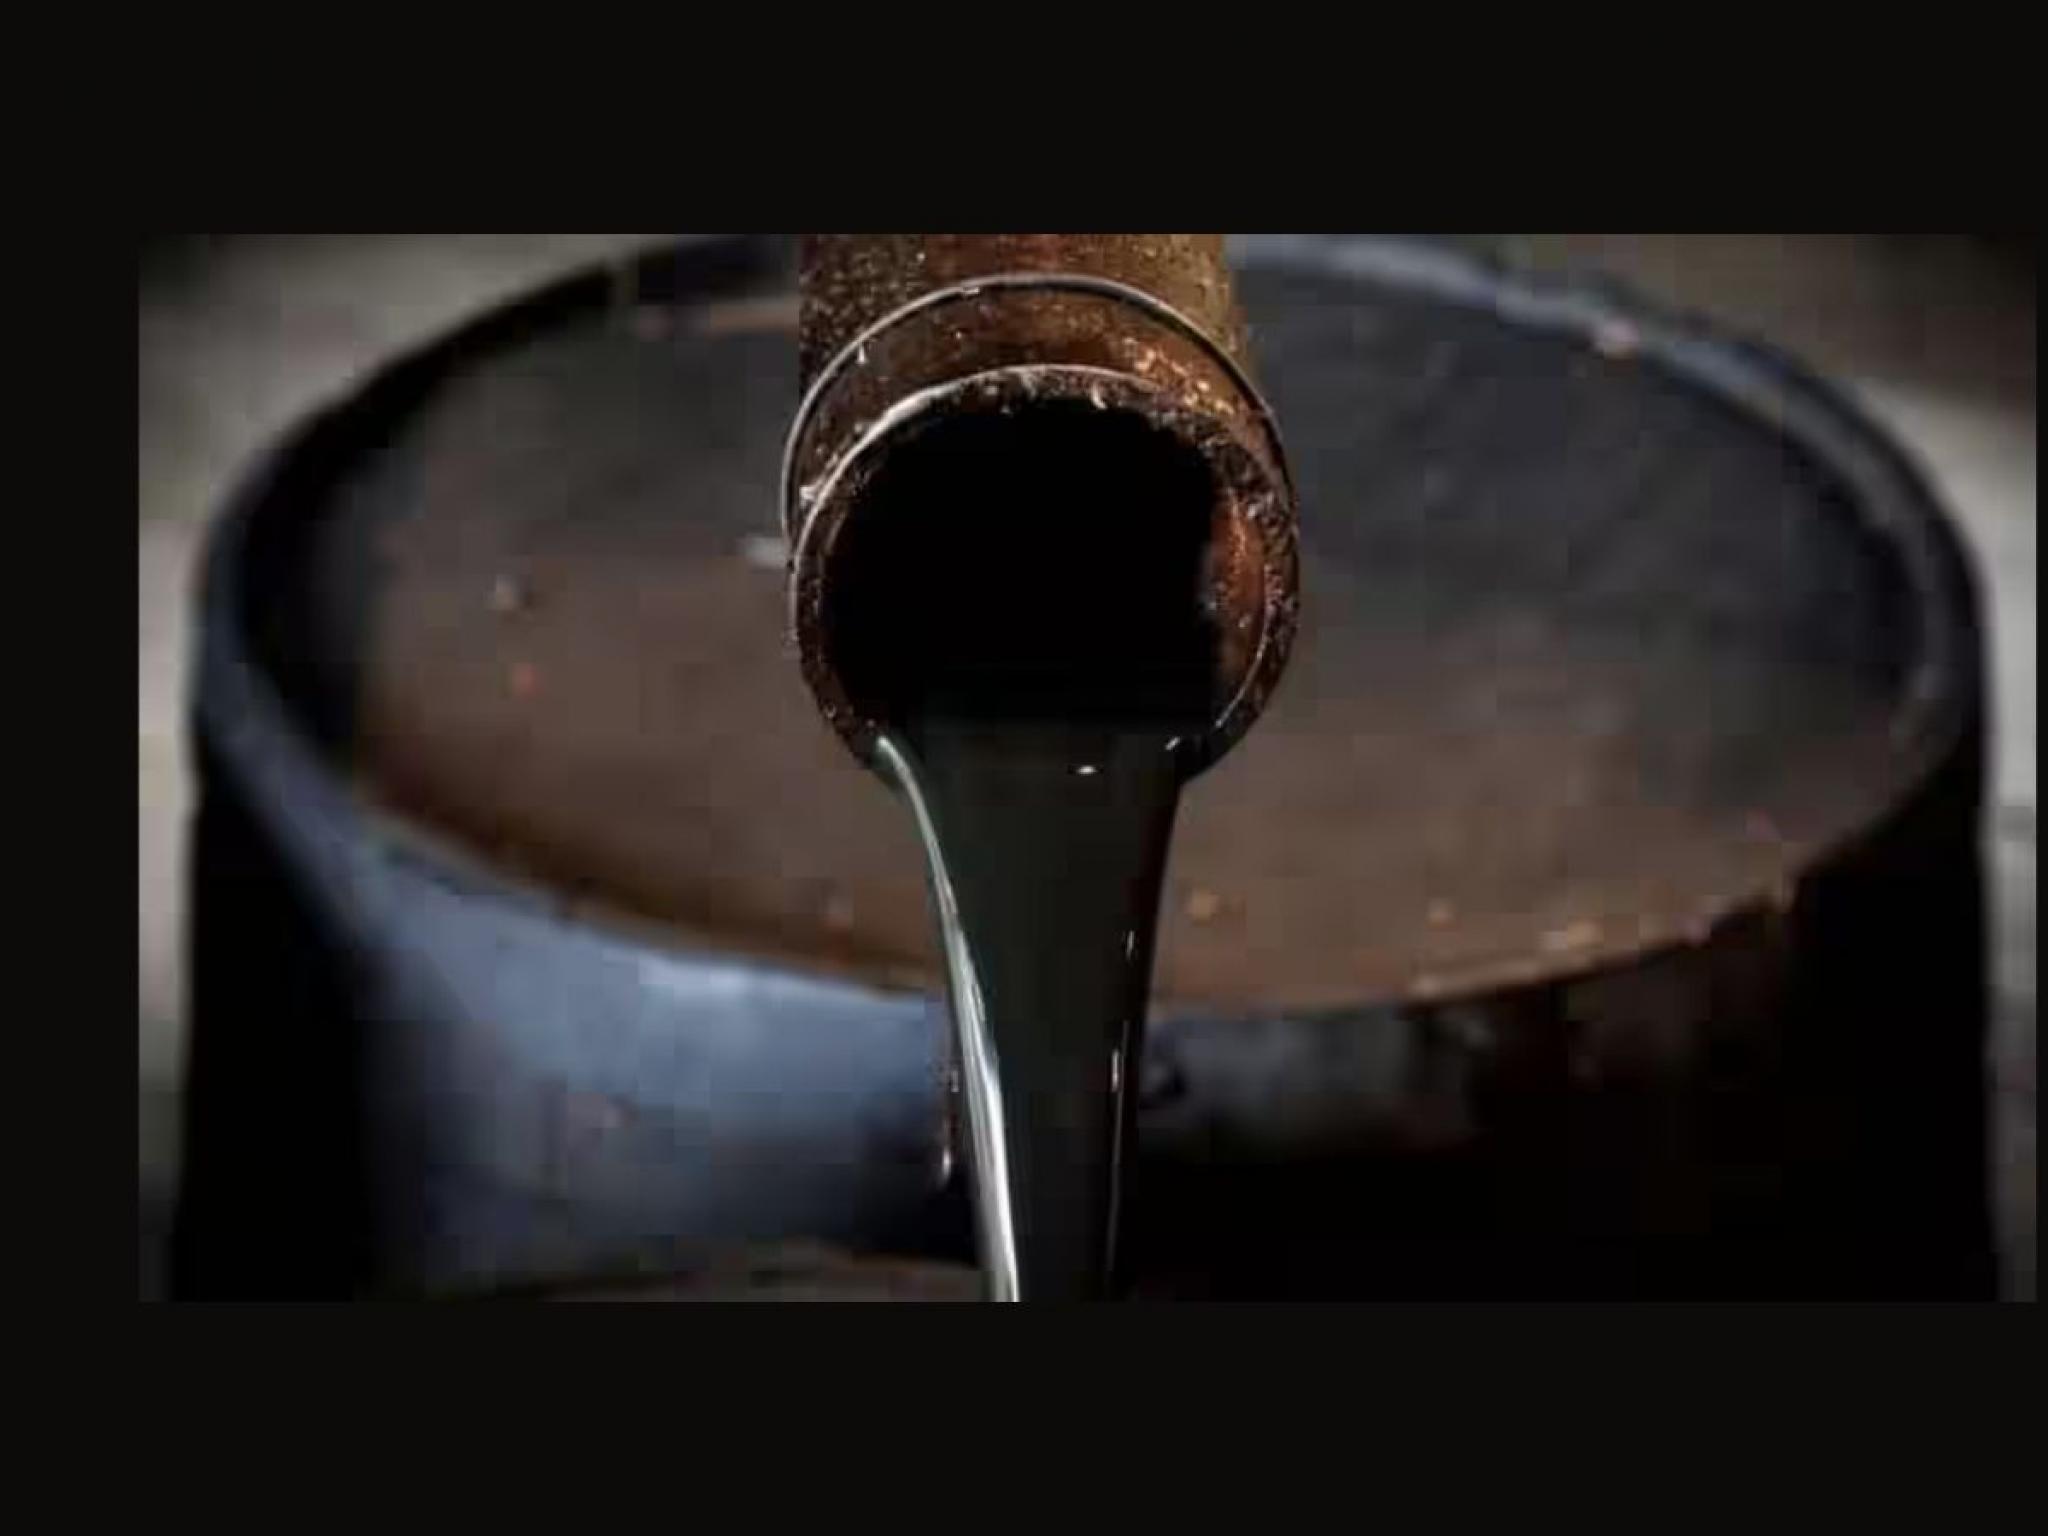  crude-oil-gains-over-1-genius-group-shares-plummet 